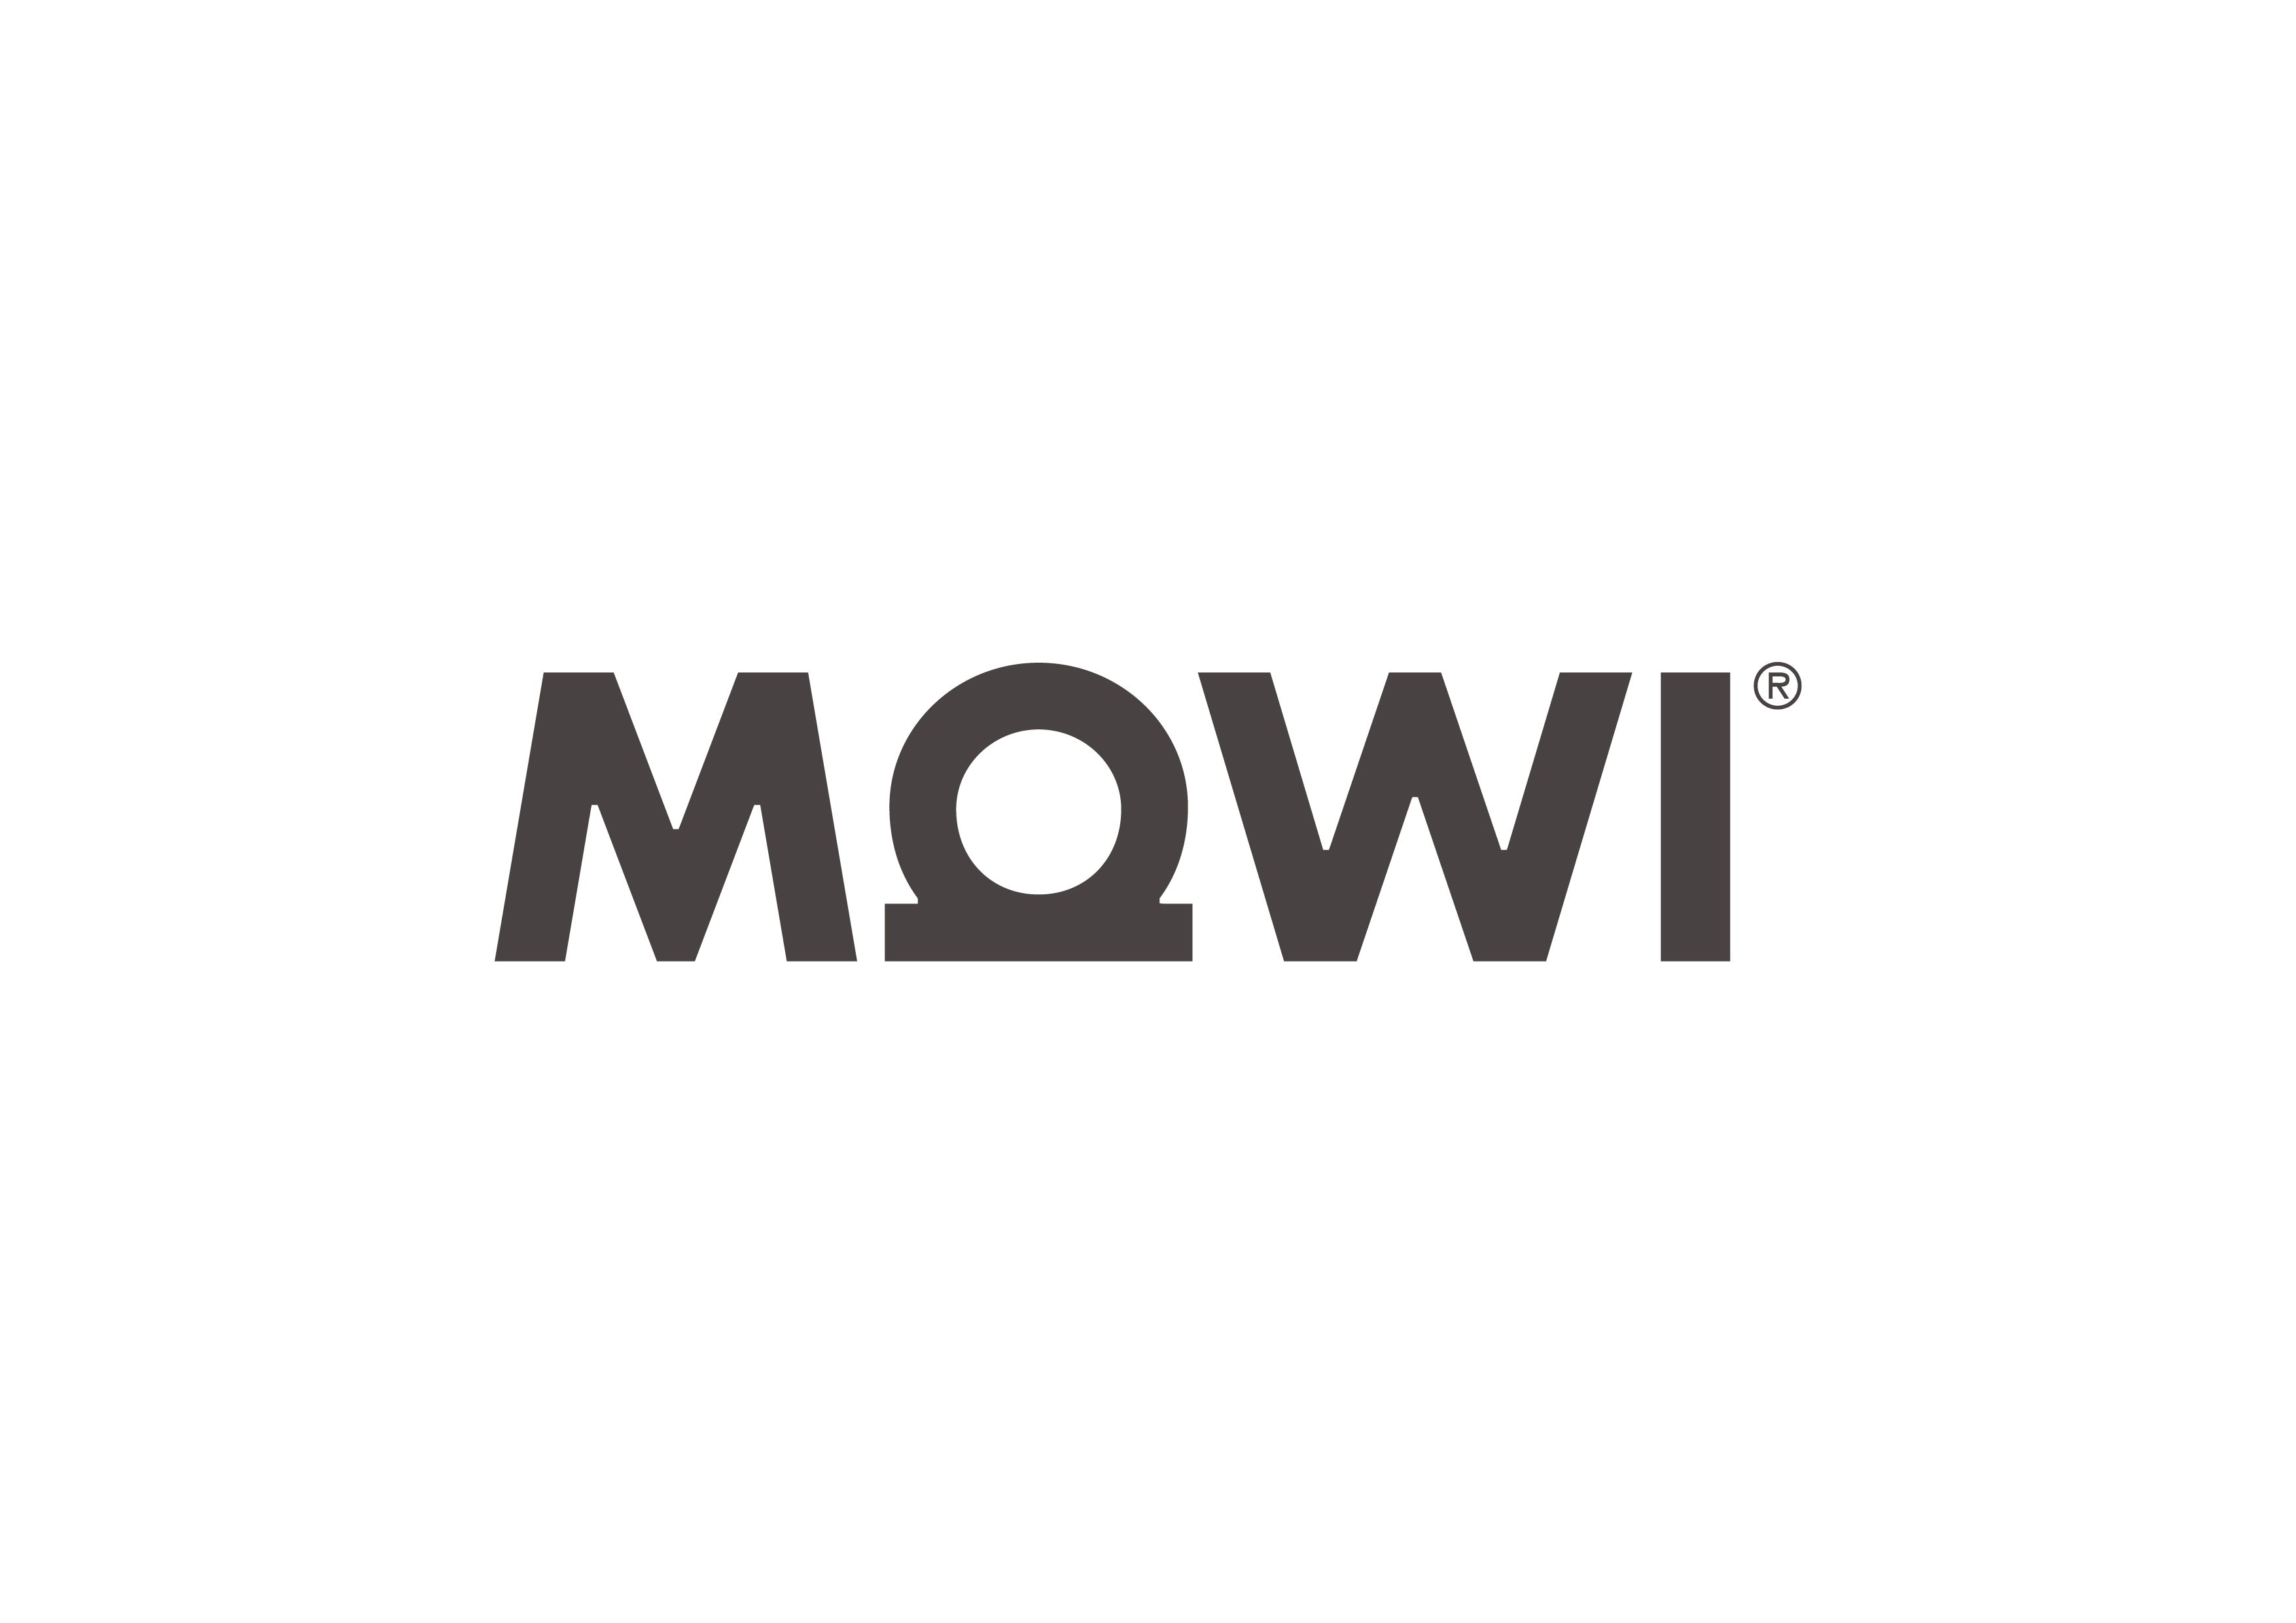 Image of MOWI logotype